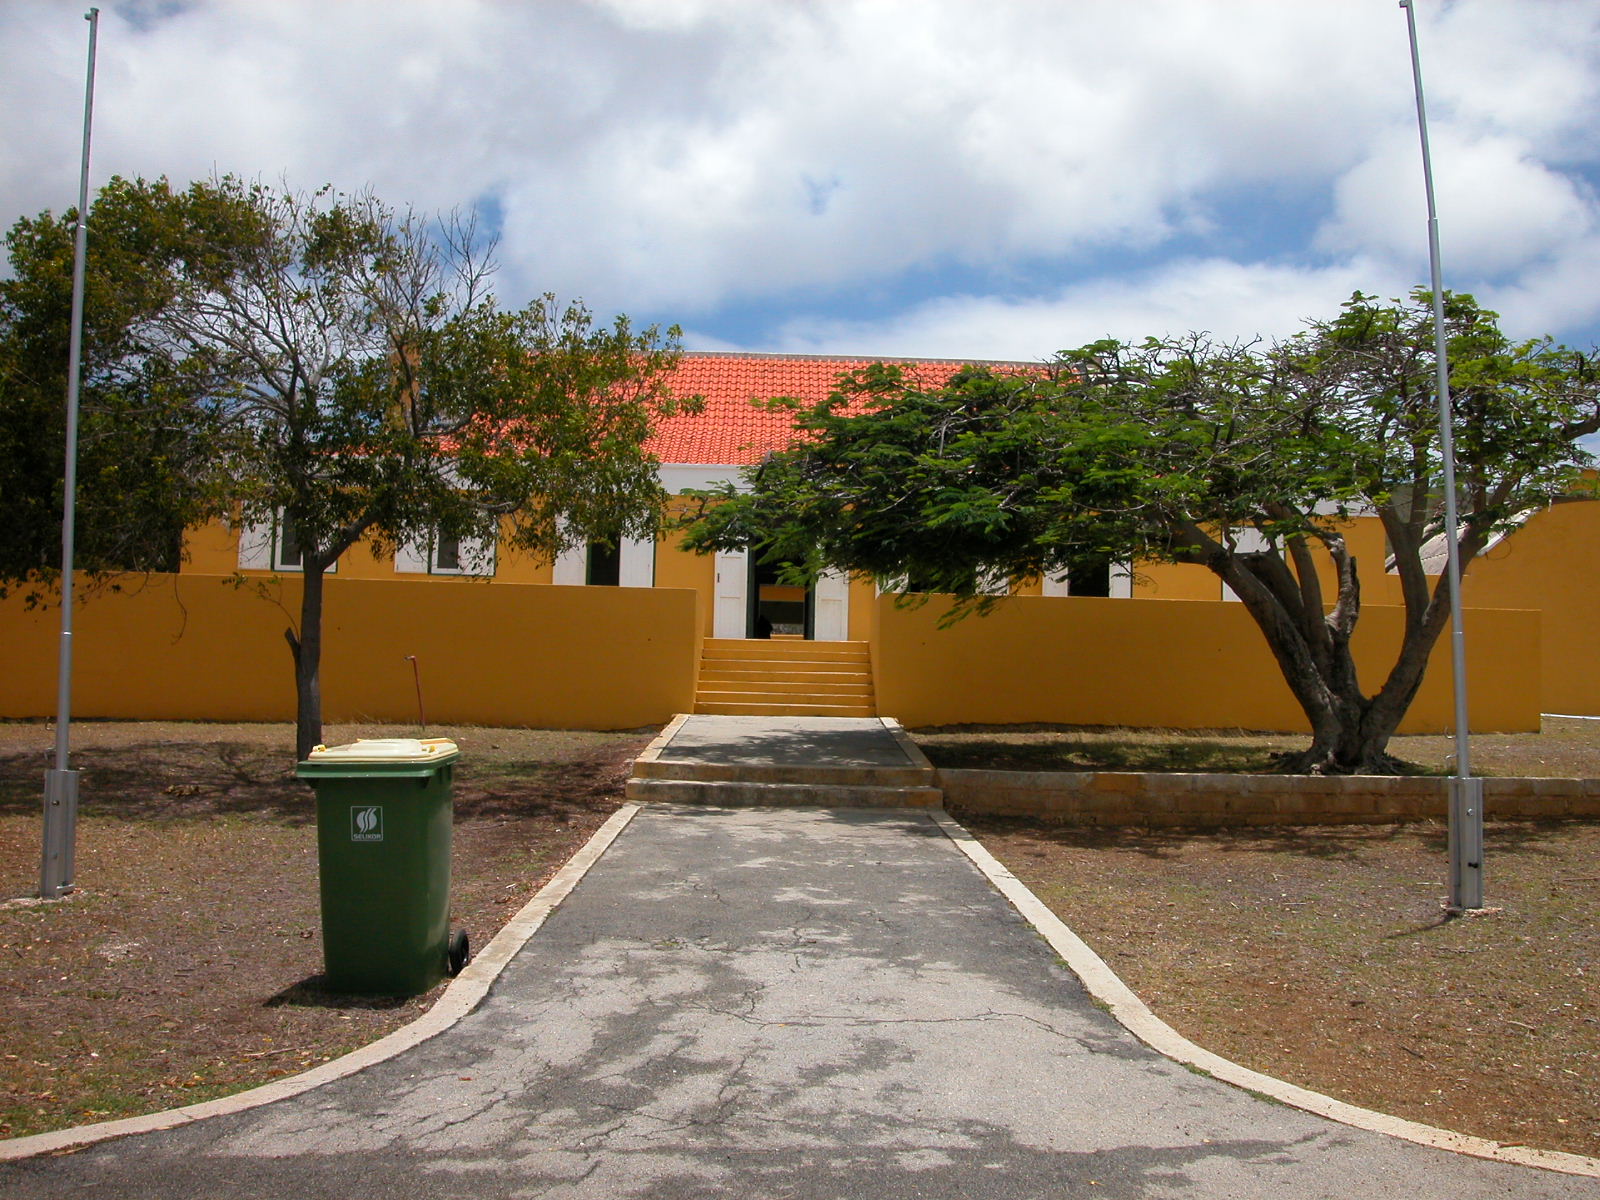 jacco warm colonial curacao path pathway rubbish bin green yellow red house